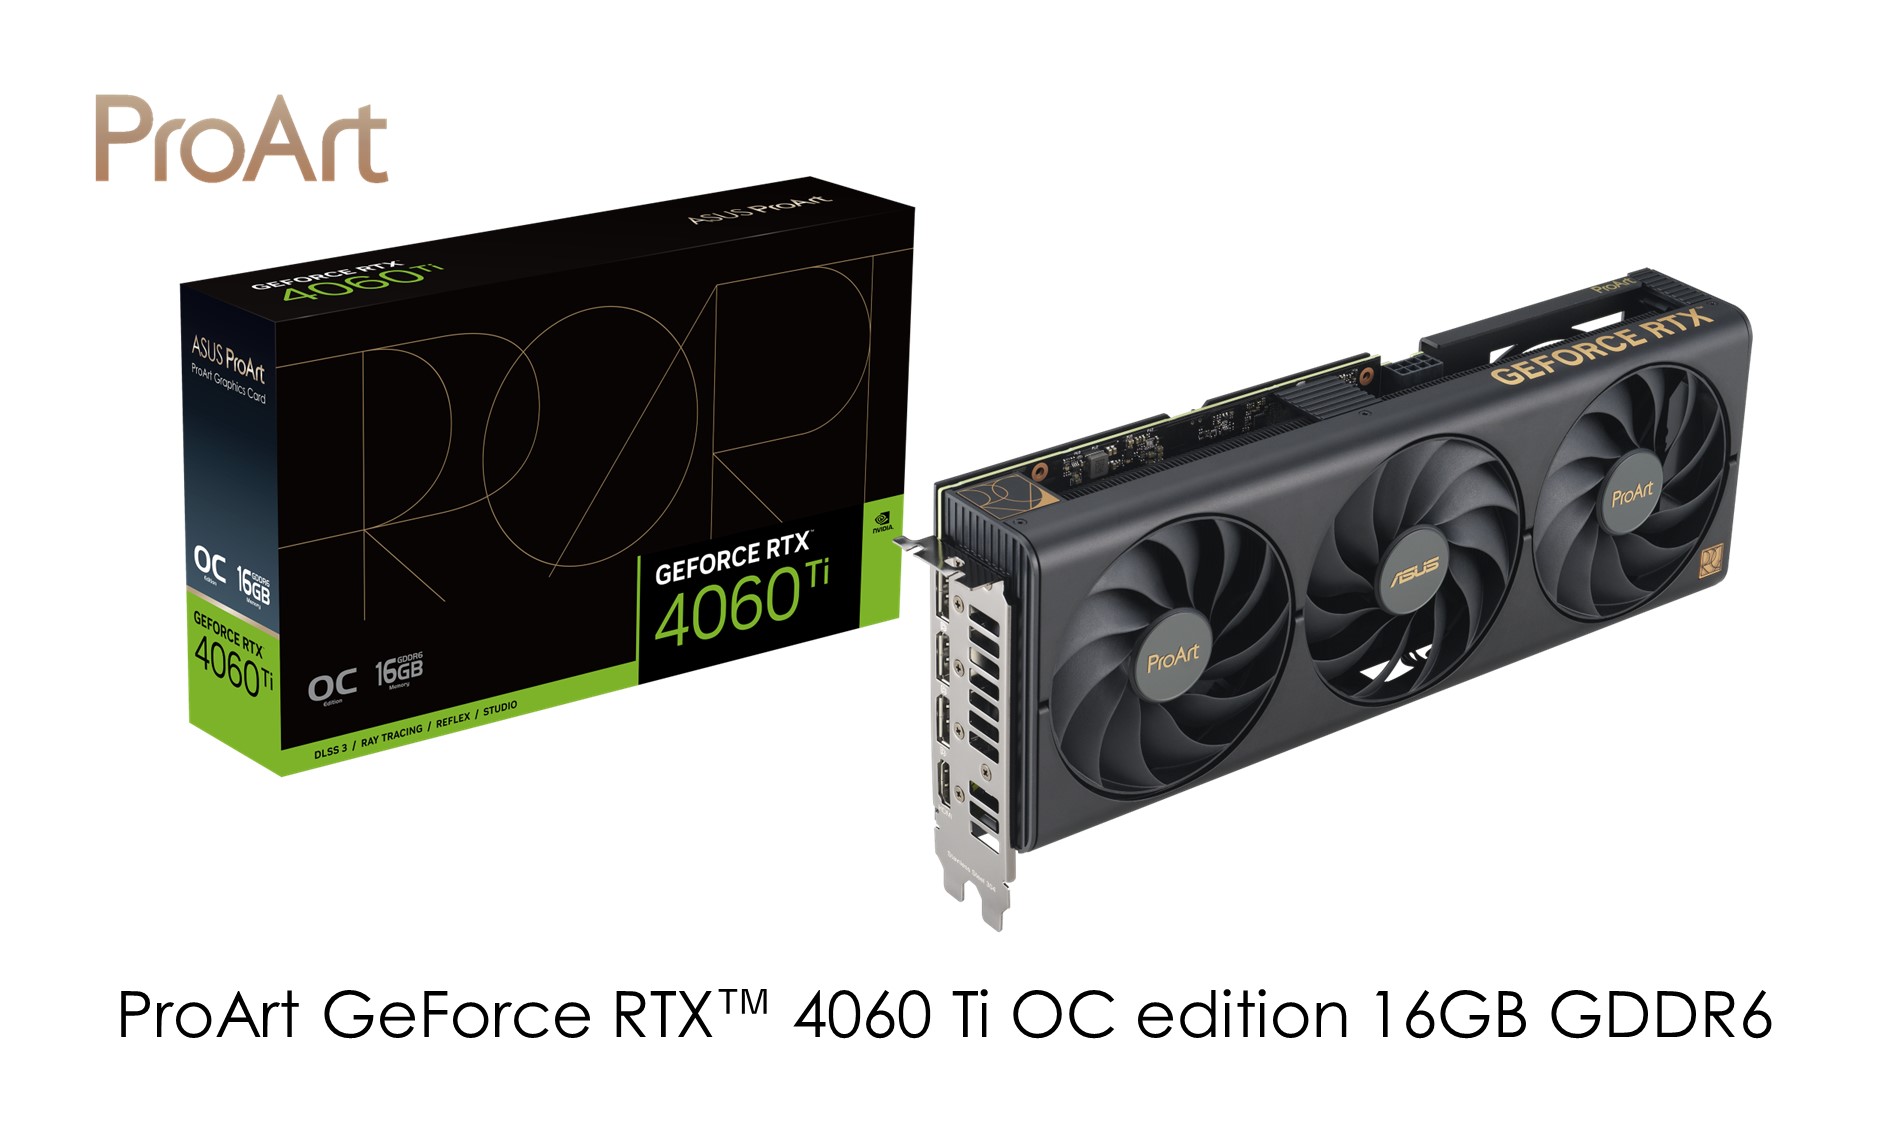 NVIDIA GeForce RTX 3060 Ti Xゲーム、クリエイター向け